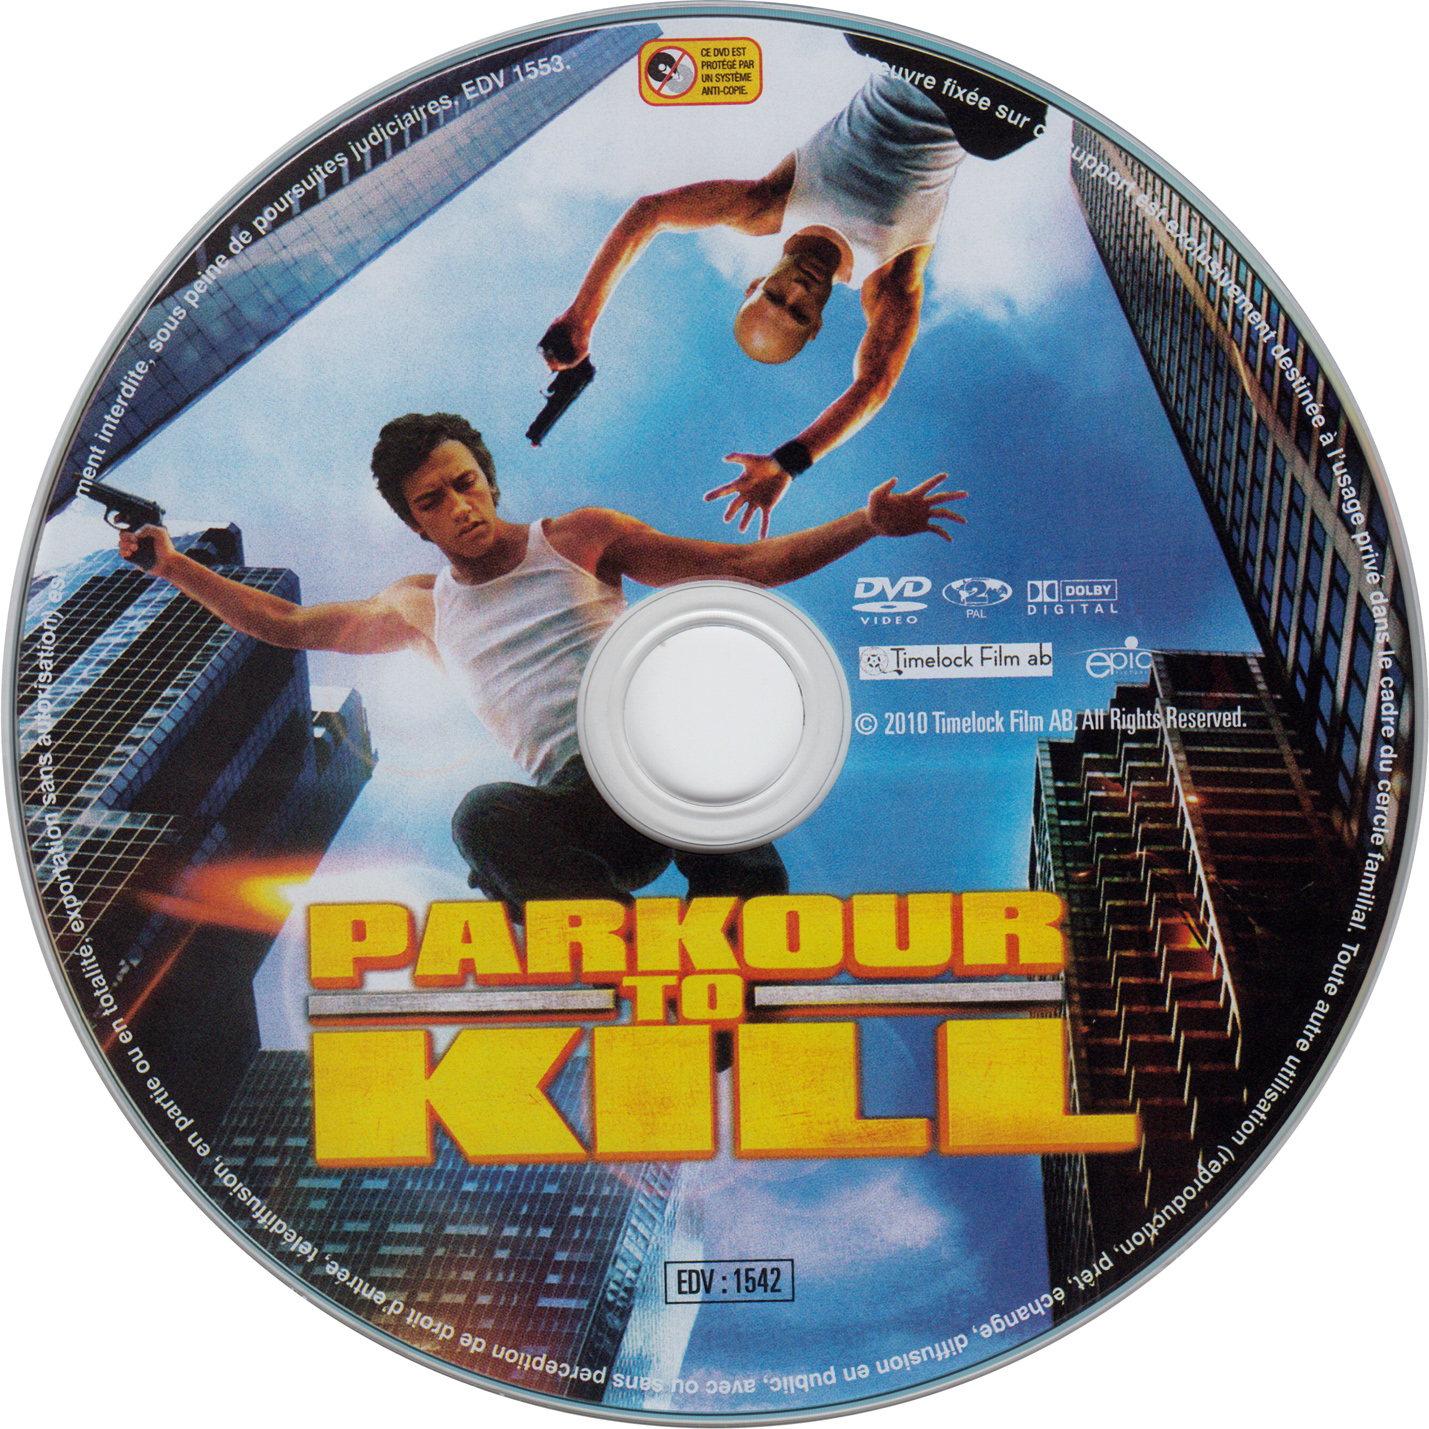 Parkour to kill